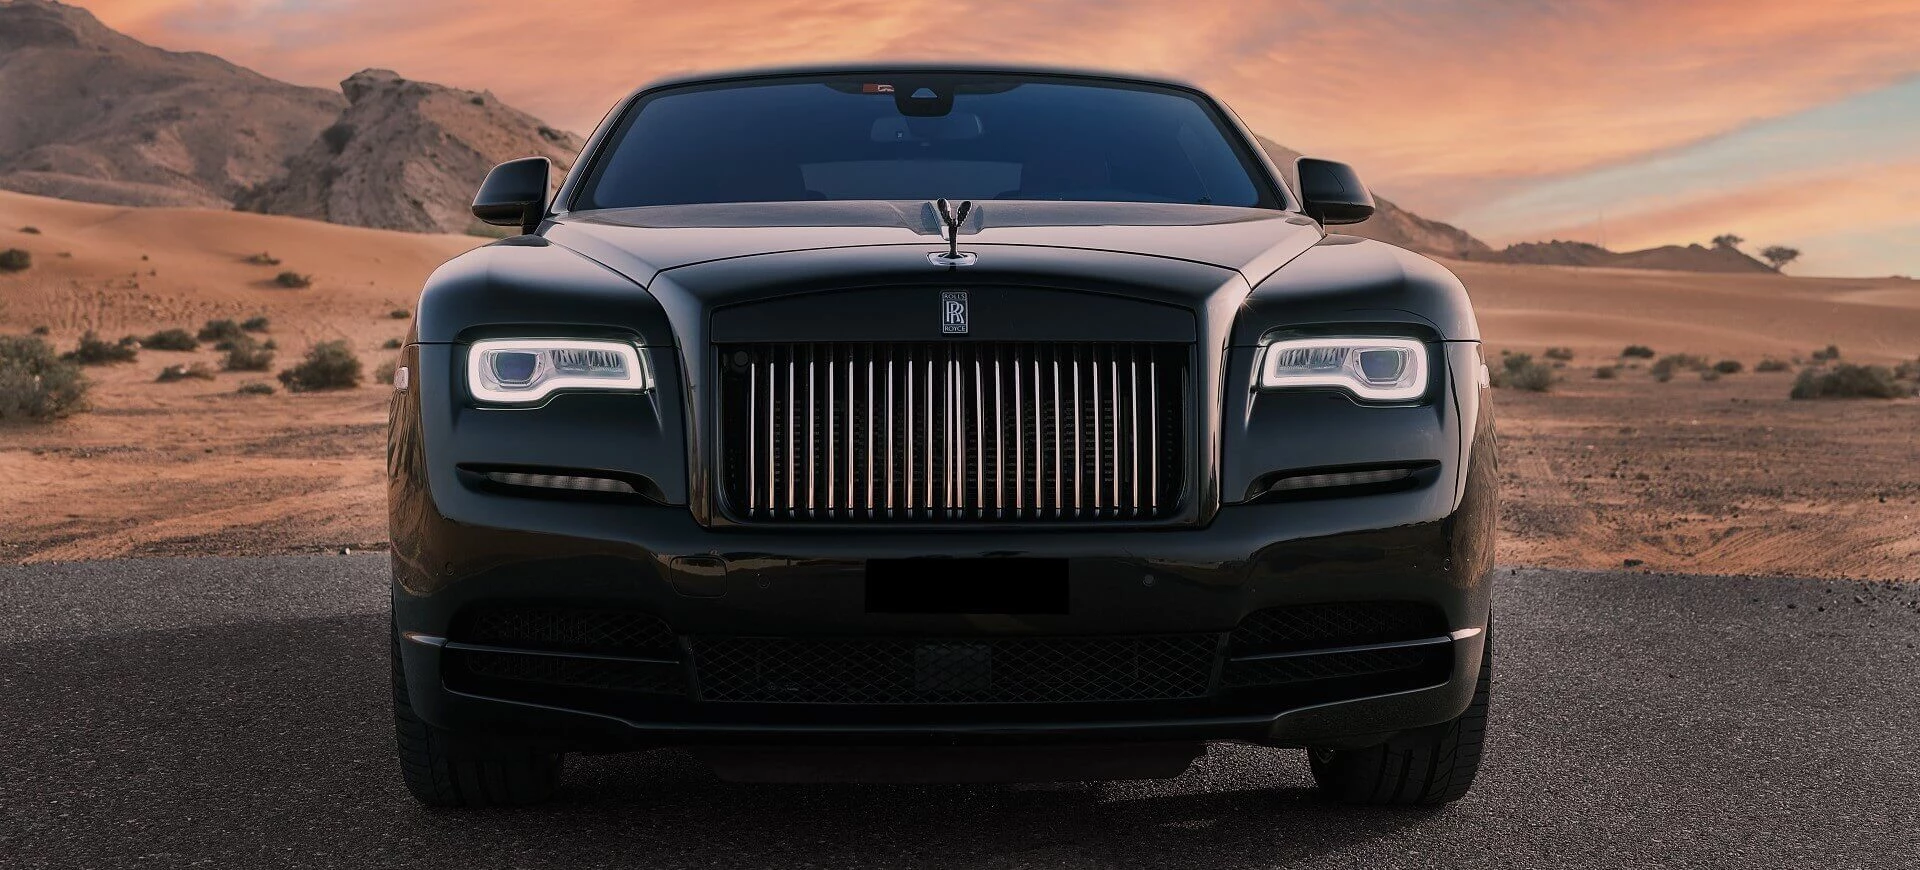 Dubai'de Rolls Royce Wraith Kiralama